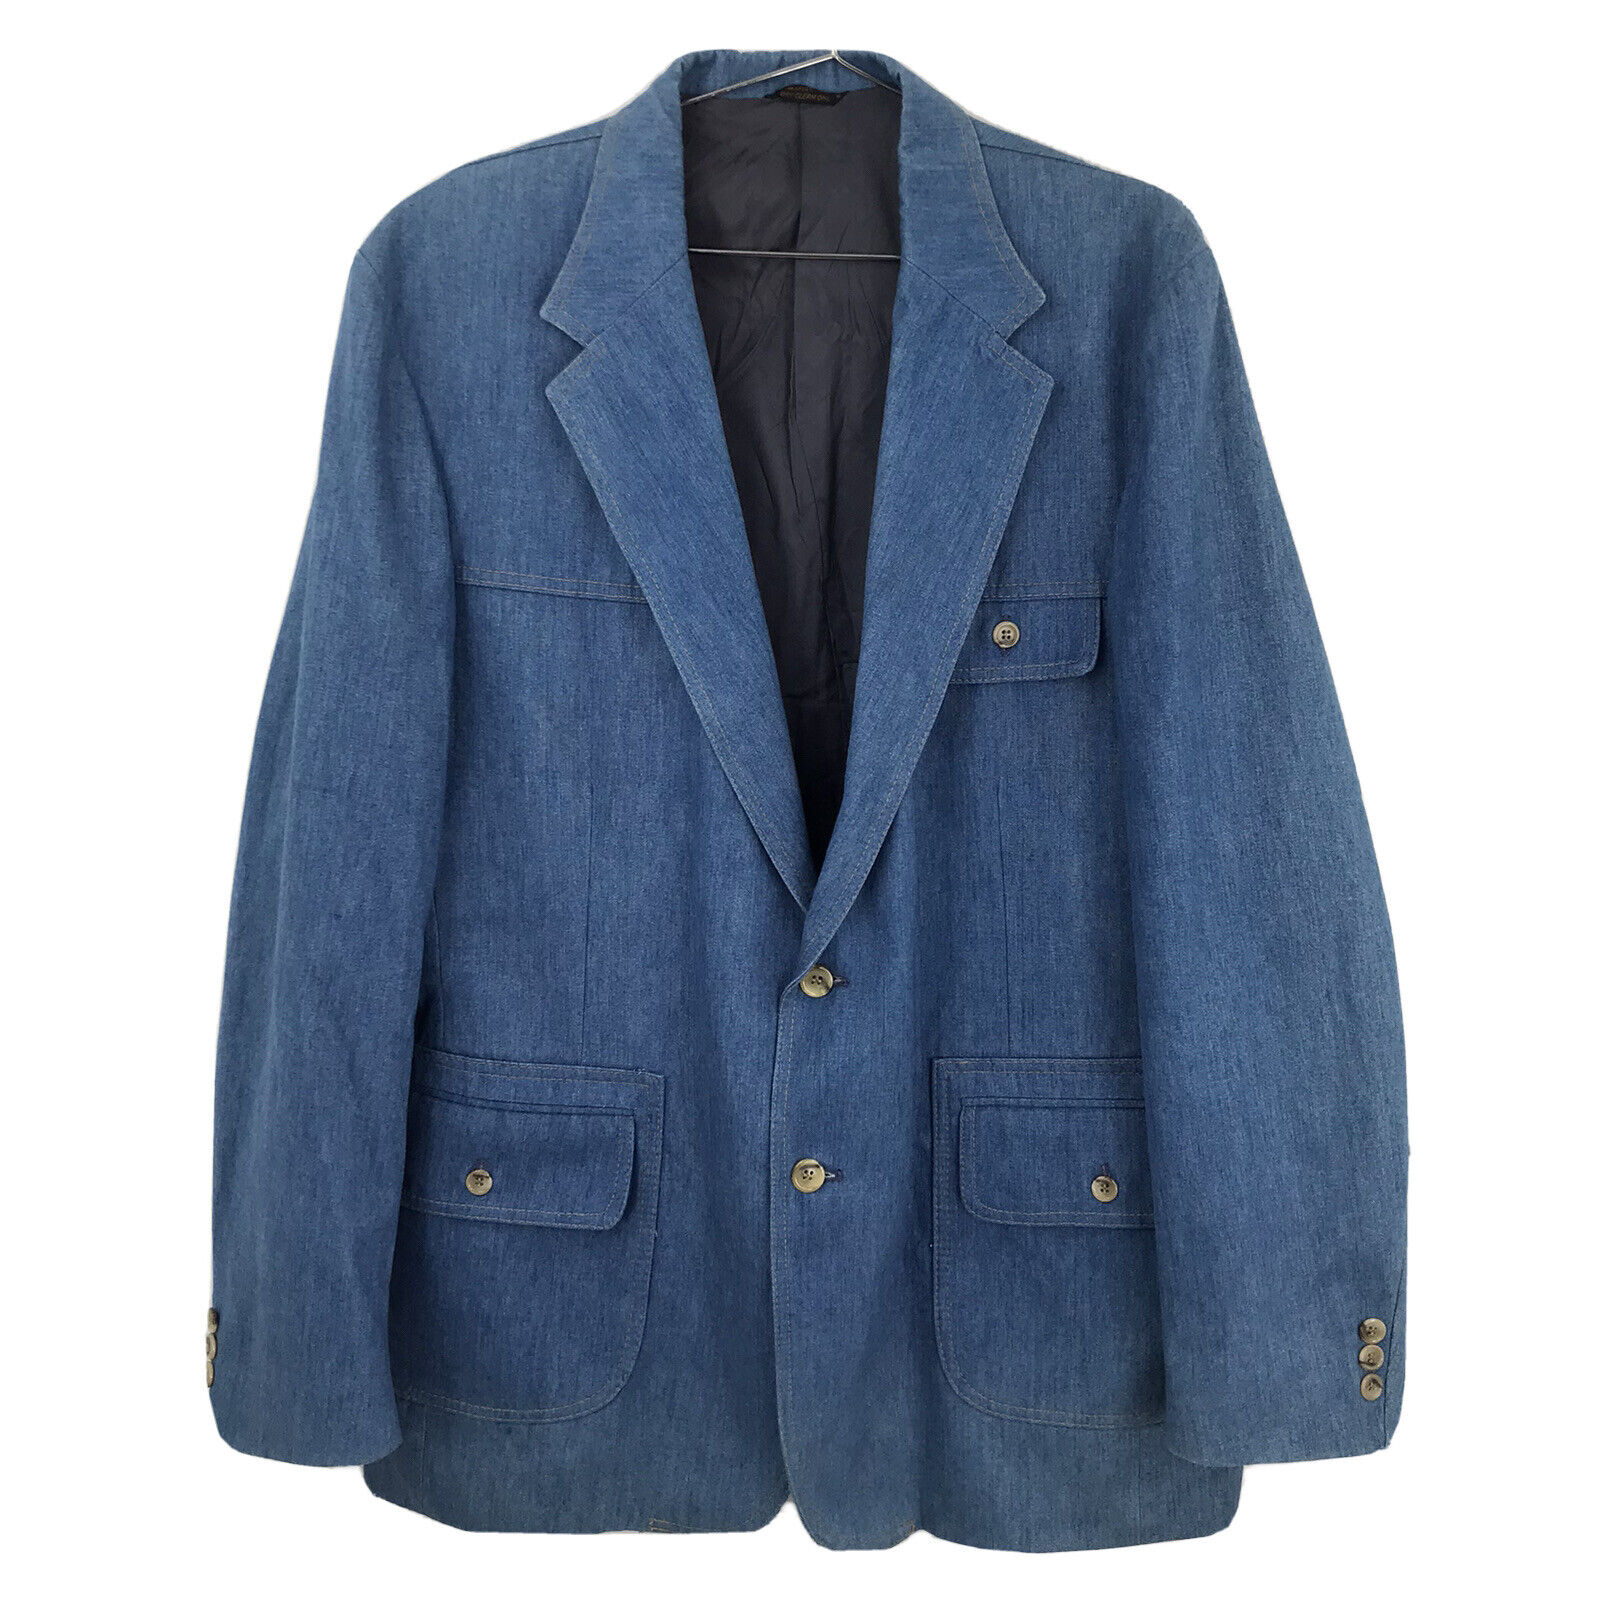 Mens 46L - Vintage Levi’s Free shipping on posting reviews Panatela Suit Same day shipping Blazer Jacket Blue Denim